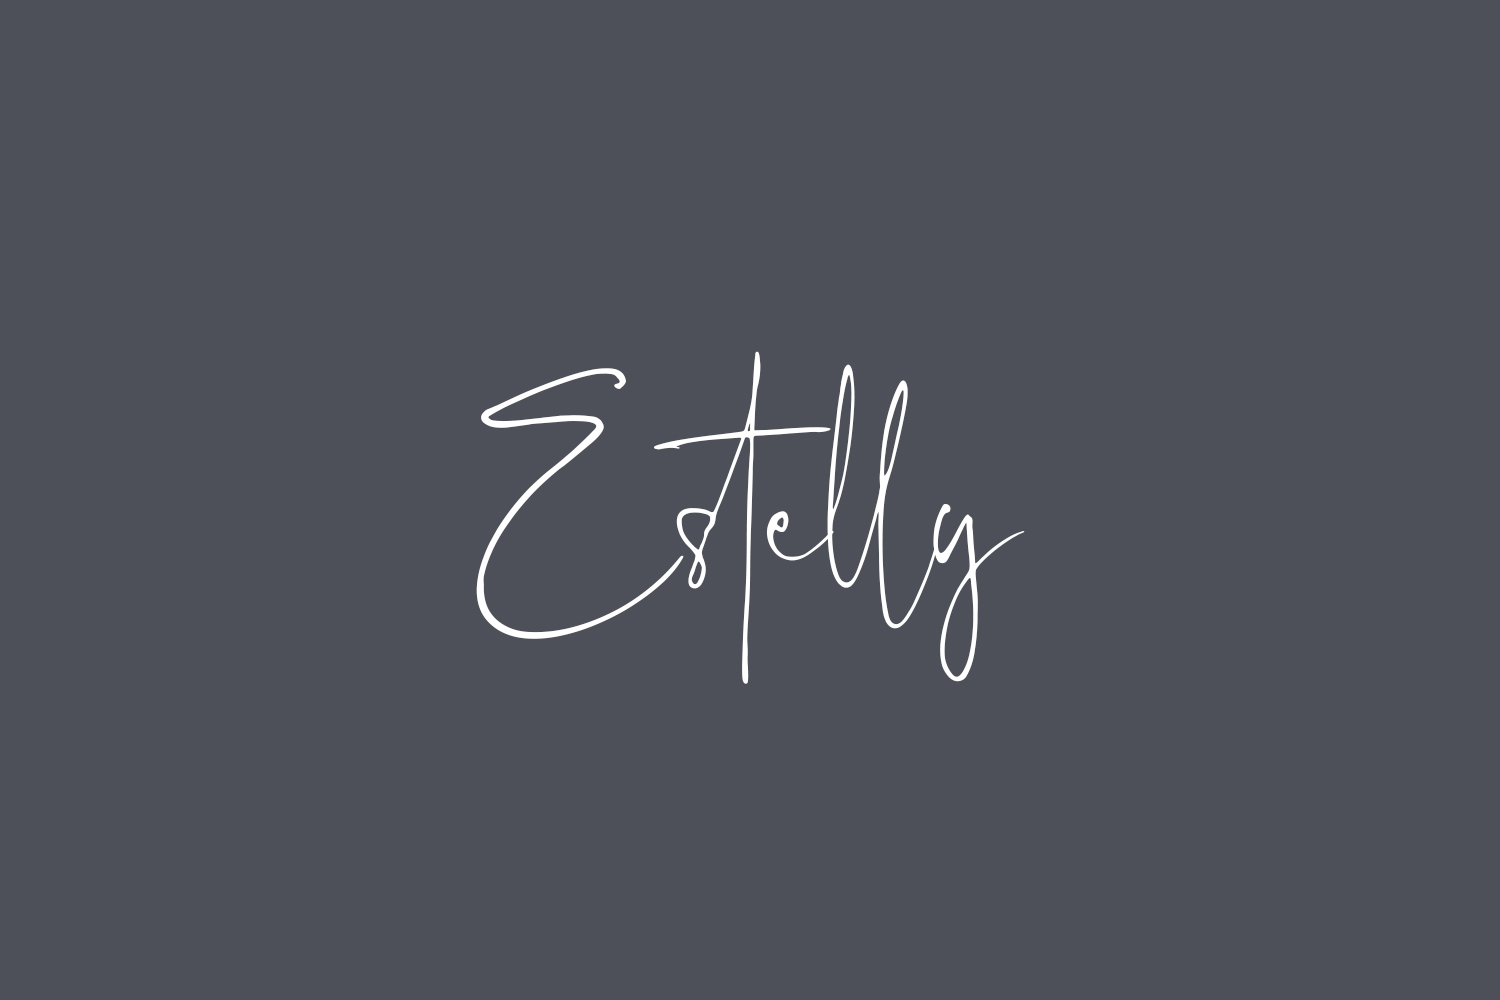 Estelly Free Font